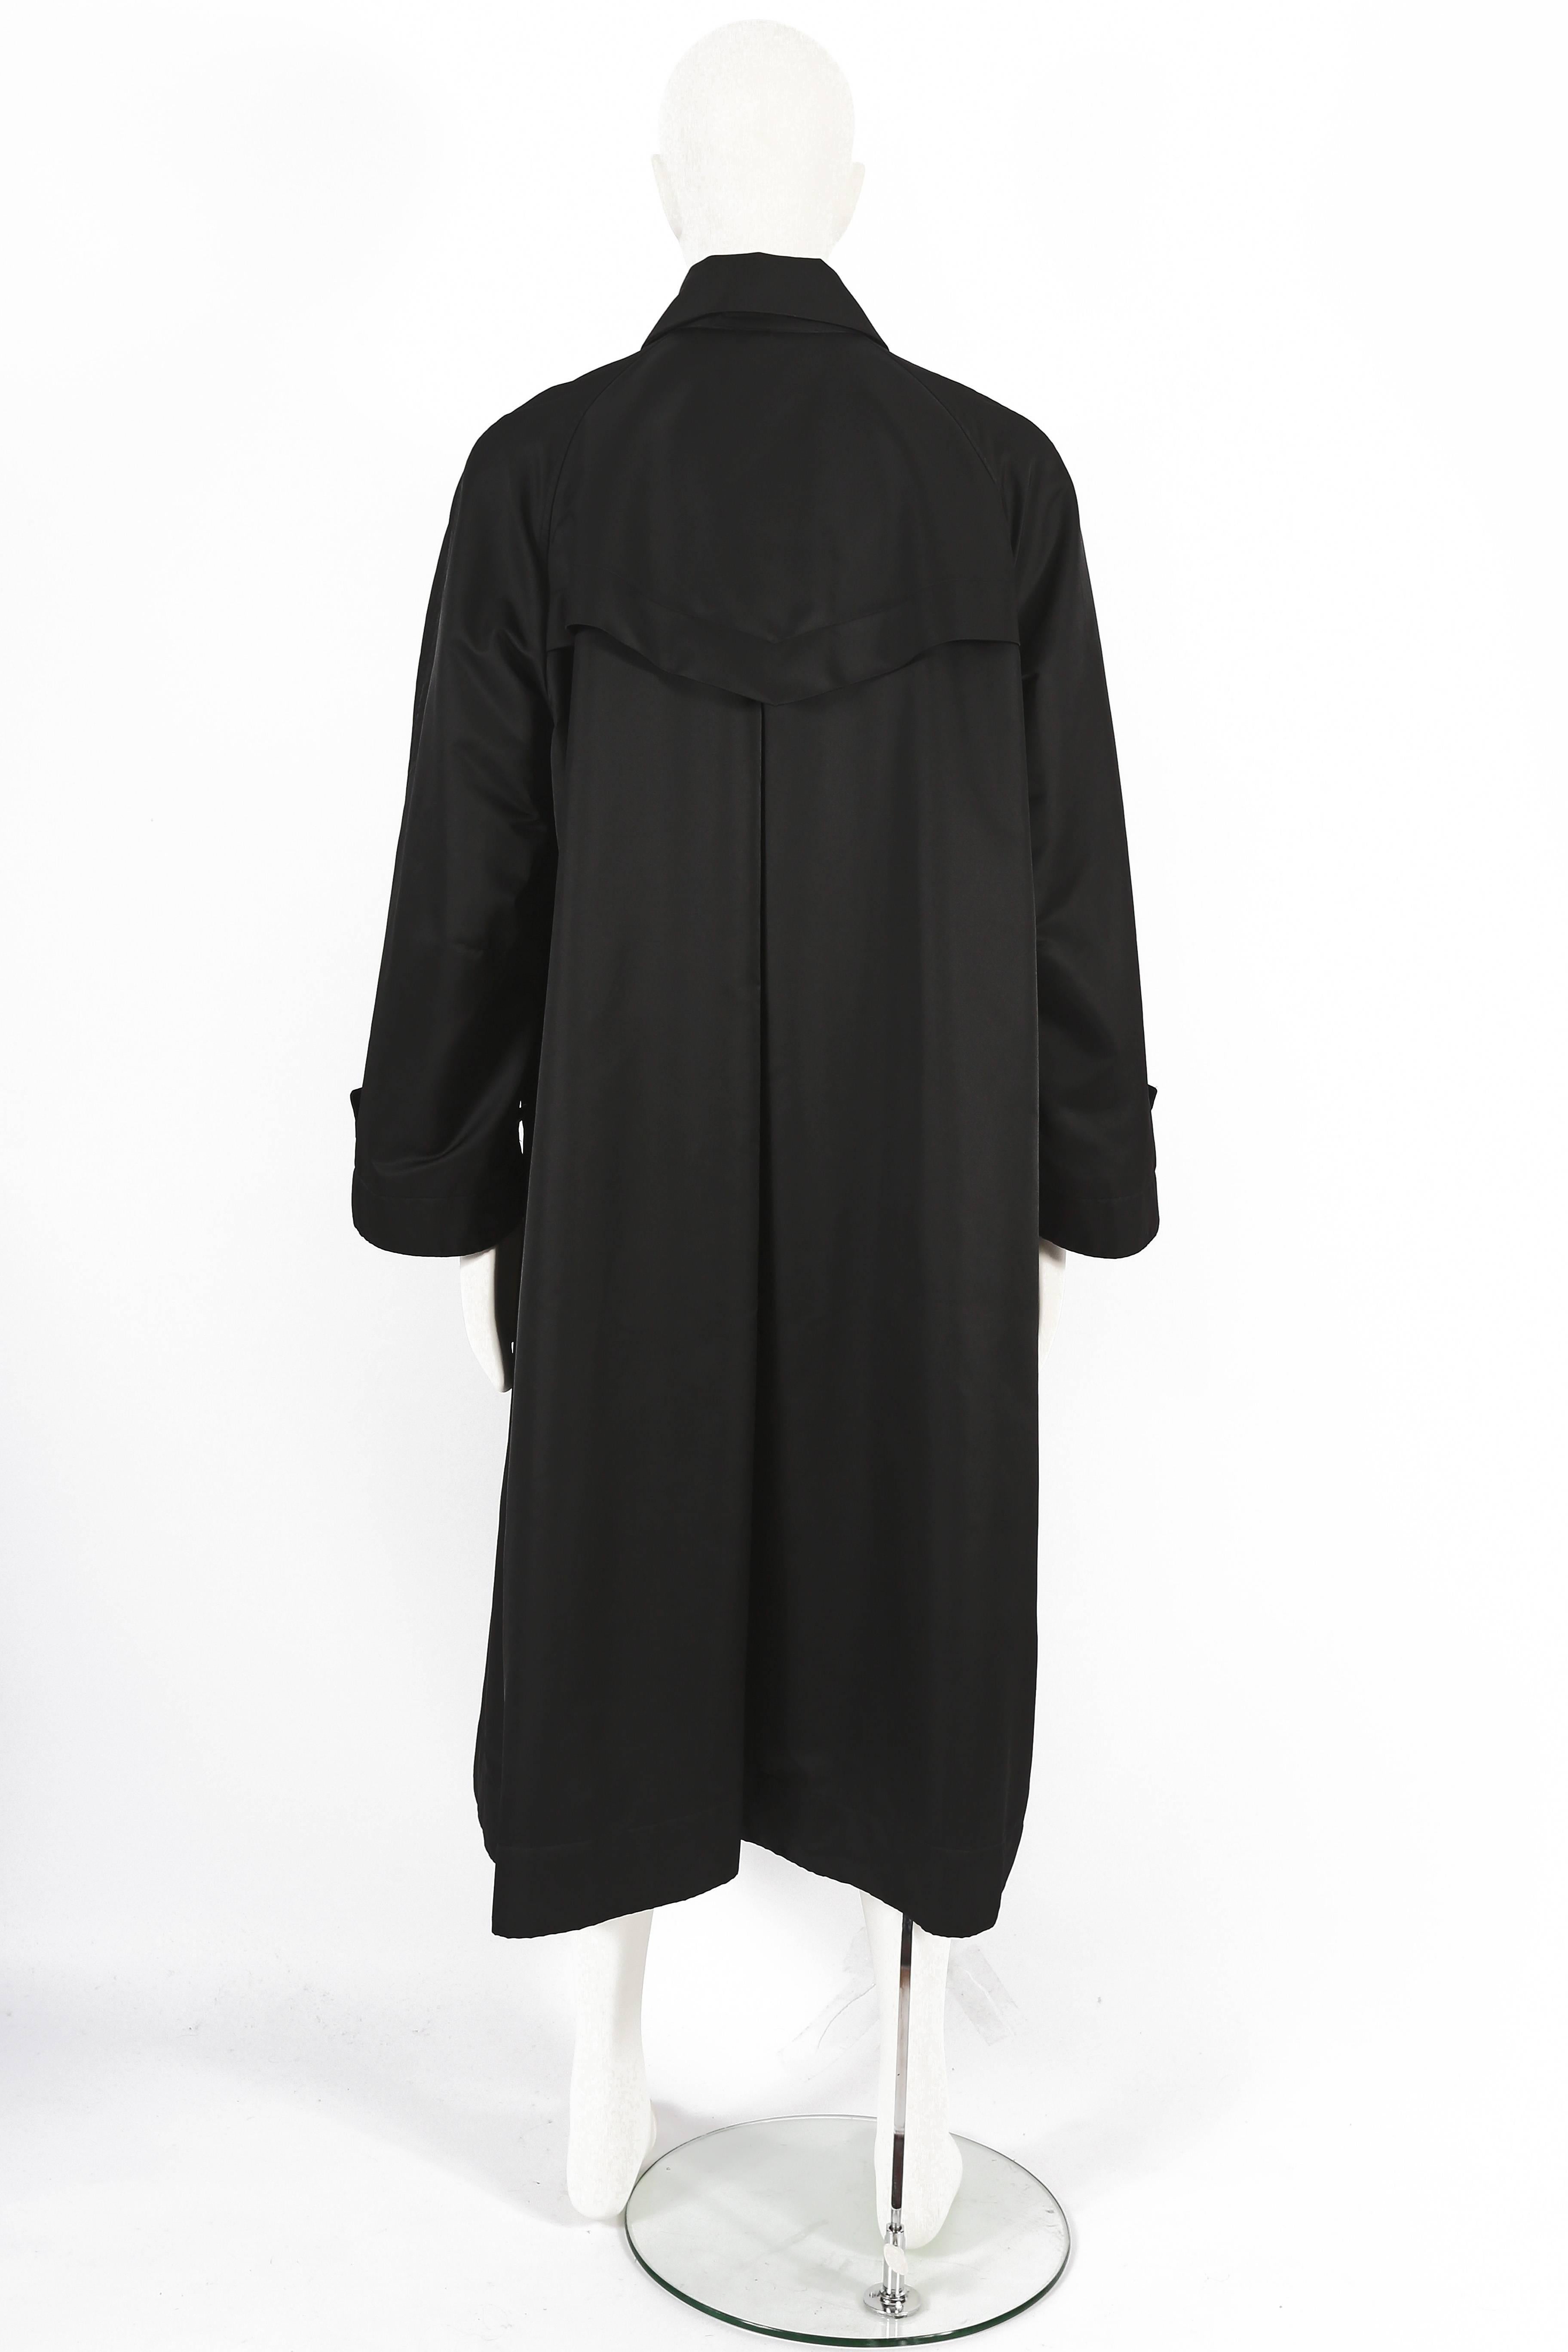 Issey Miyake Mens oversized black nylon coat, c. 1990s For Sale 1